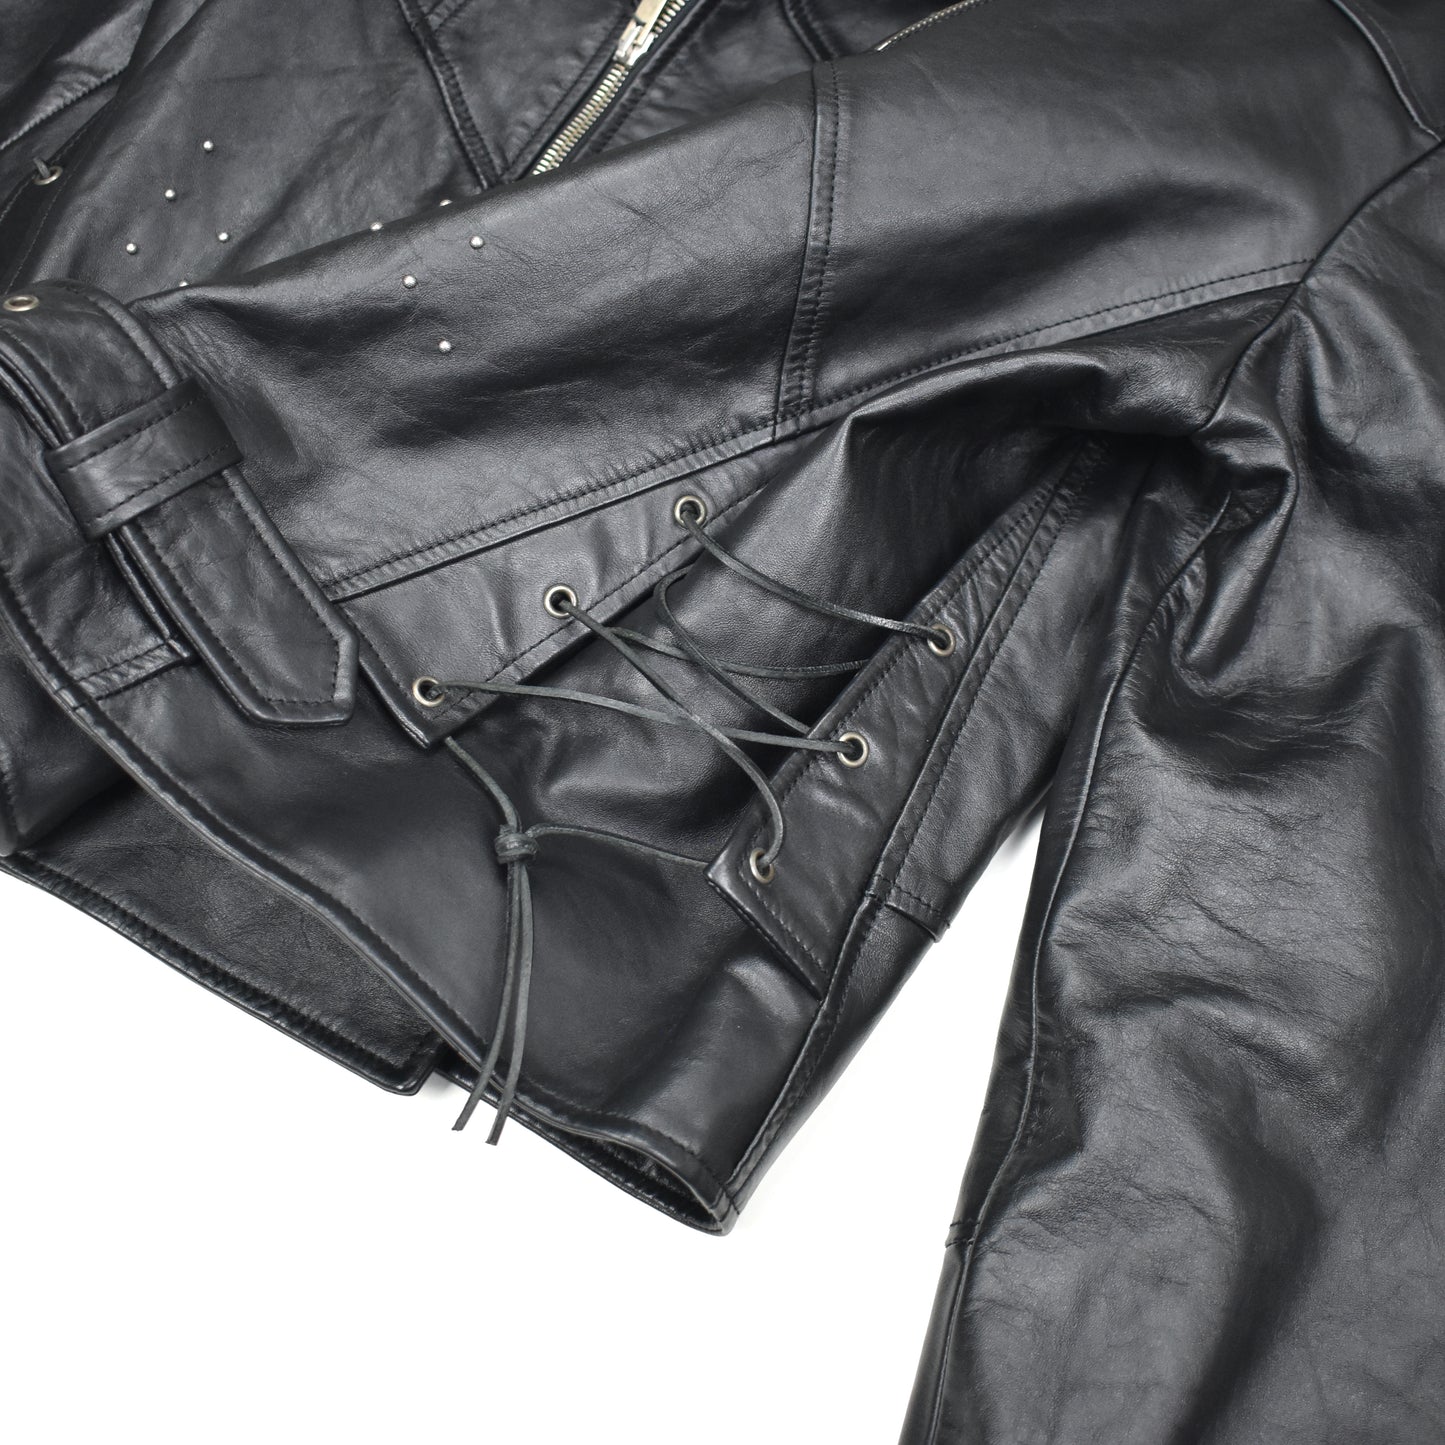 Saint Laurent - Black Studded Leather Biker Jacket